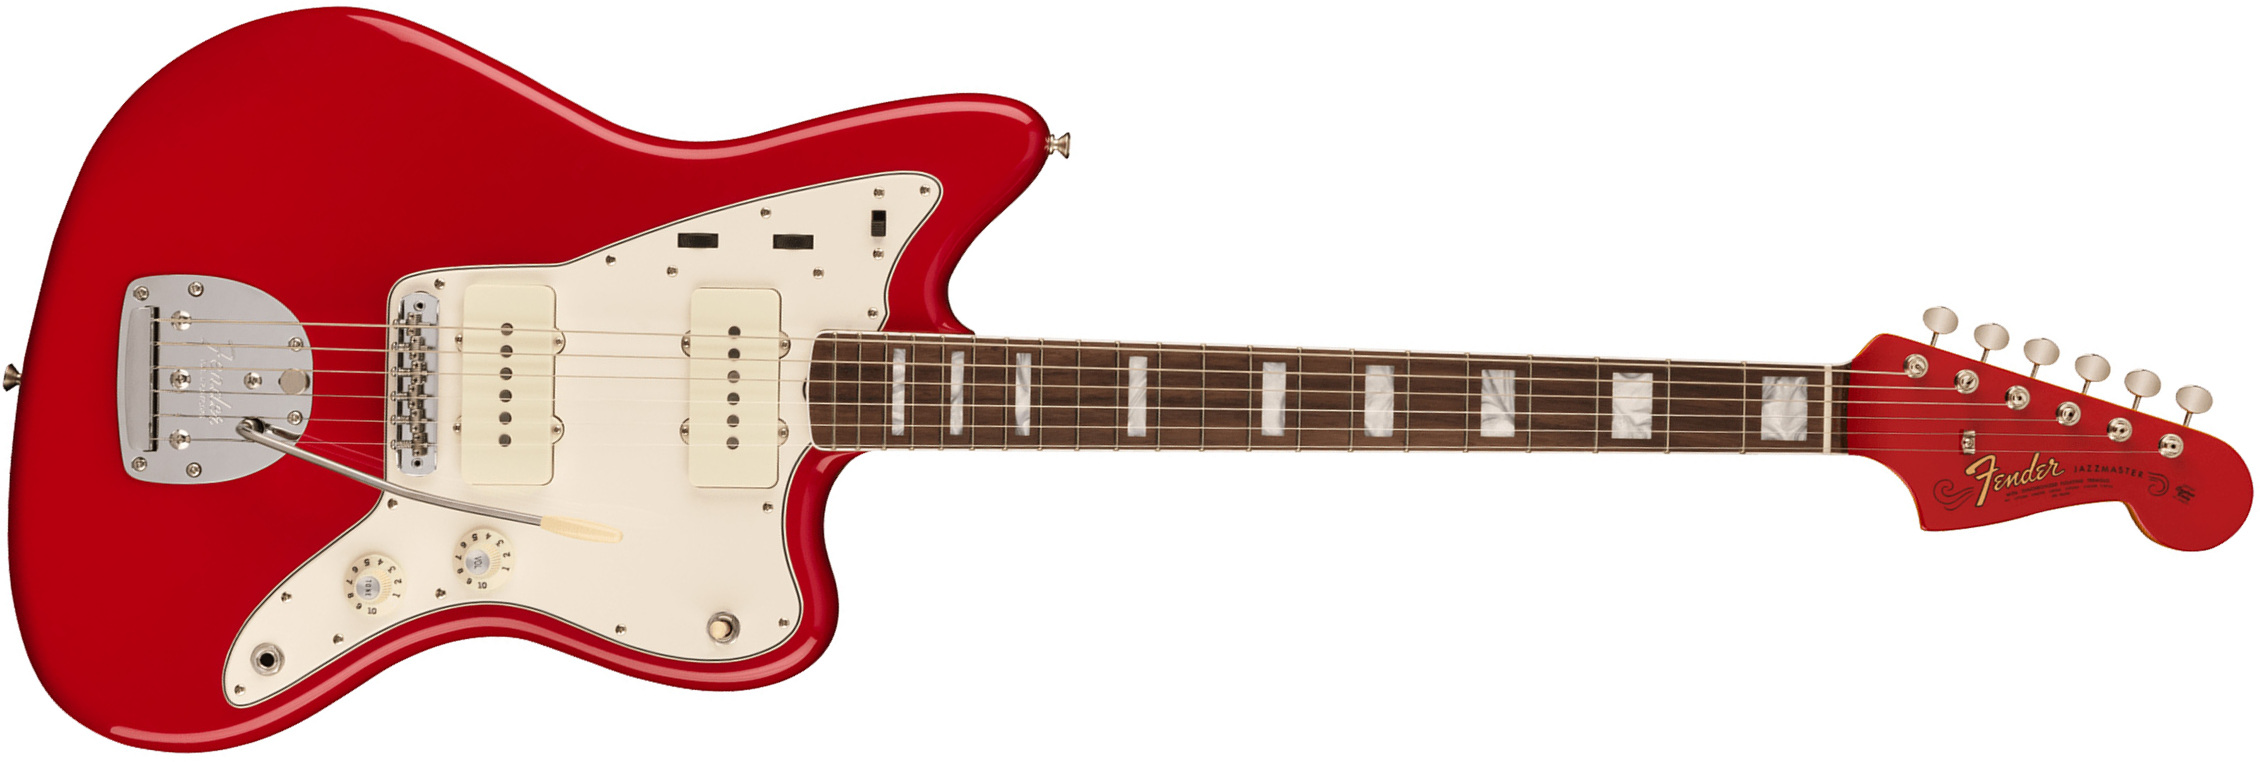 Fender Jazzmaster 1966 American Vintage Ii Usa Sh Trem Rw - Dakota Red - Retro-Rock-E-Gitarre - Main picture